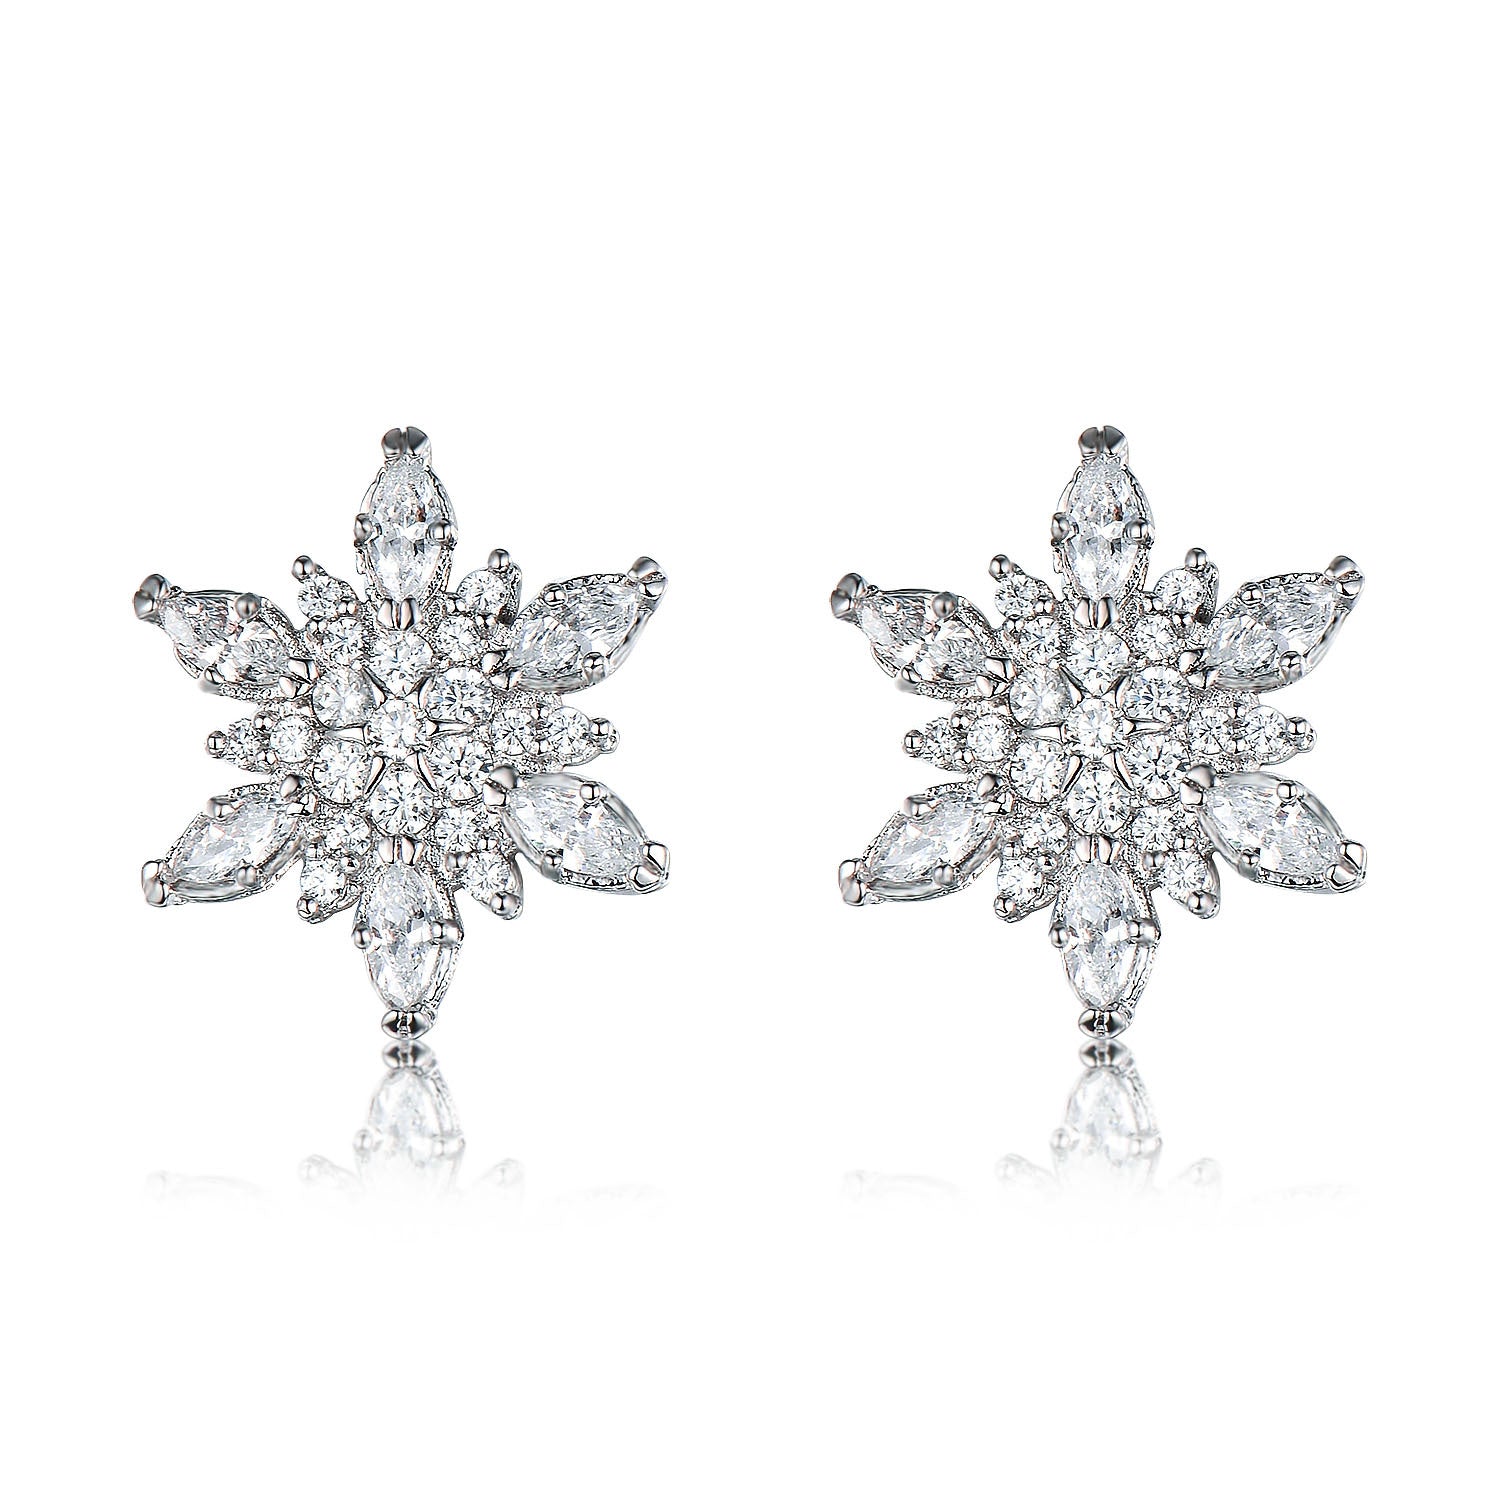 Creative Gold Plated Flower Charm Clip On Earrings Sparkling Rhinestone Crystal Snowflake Earrings